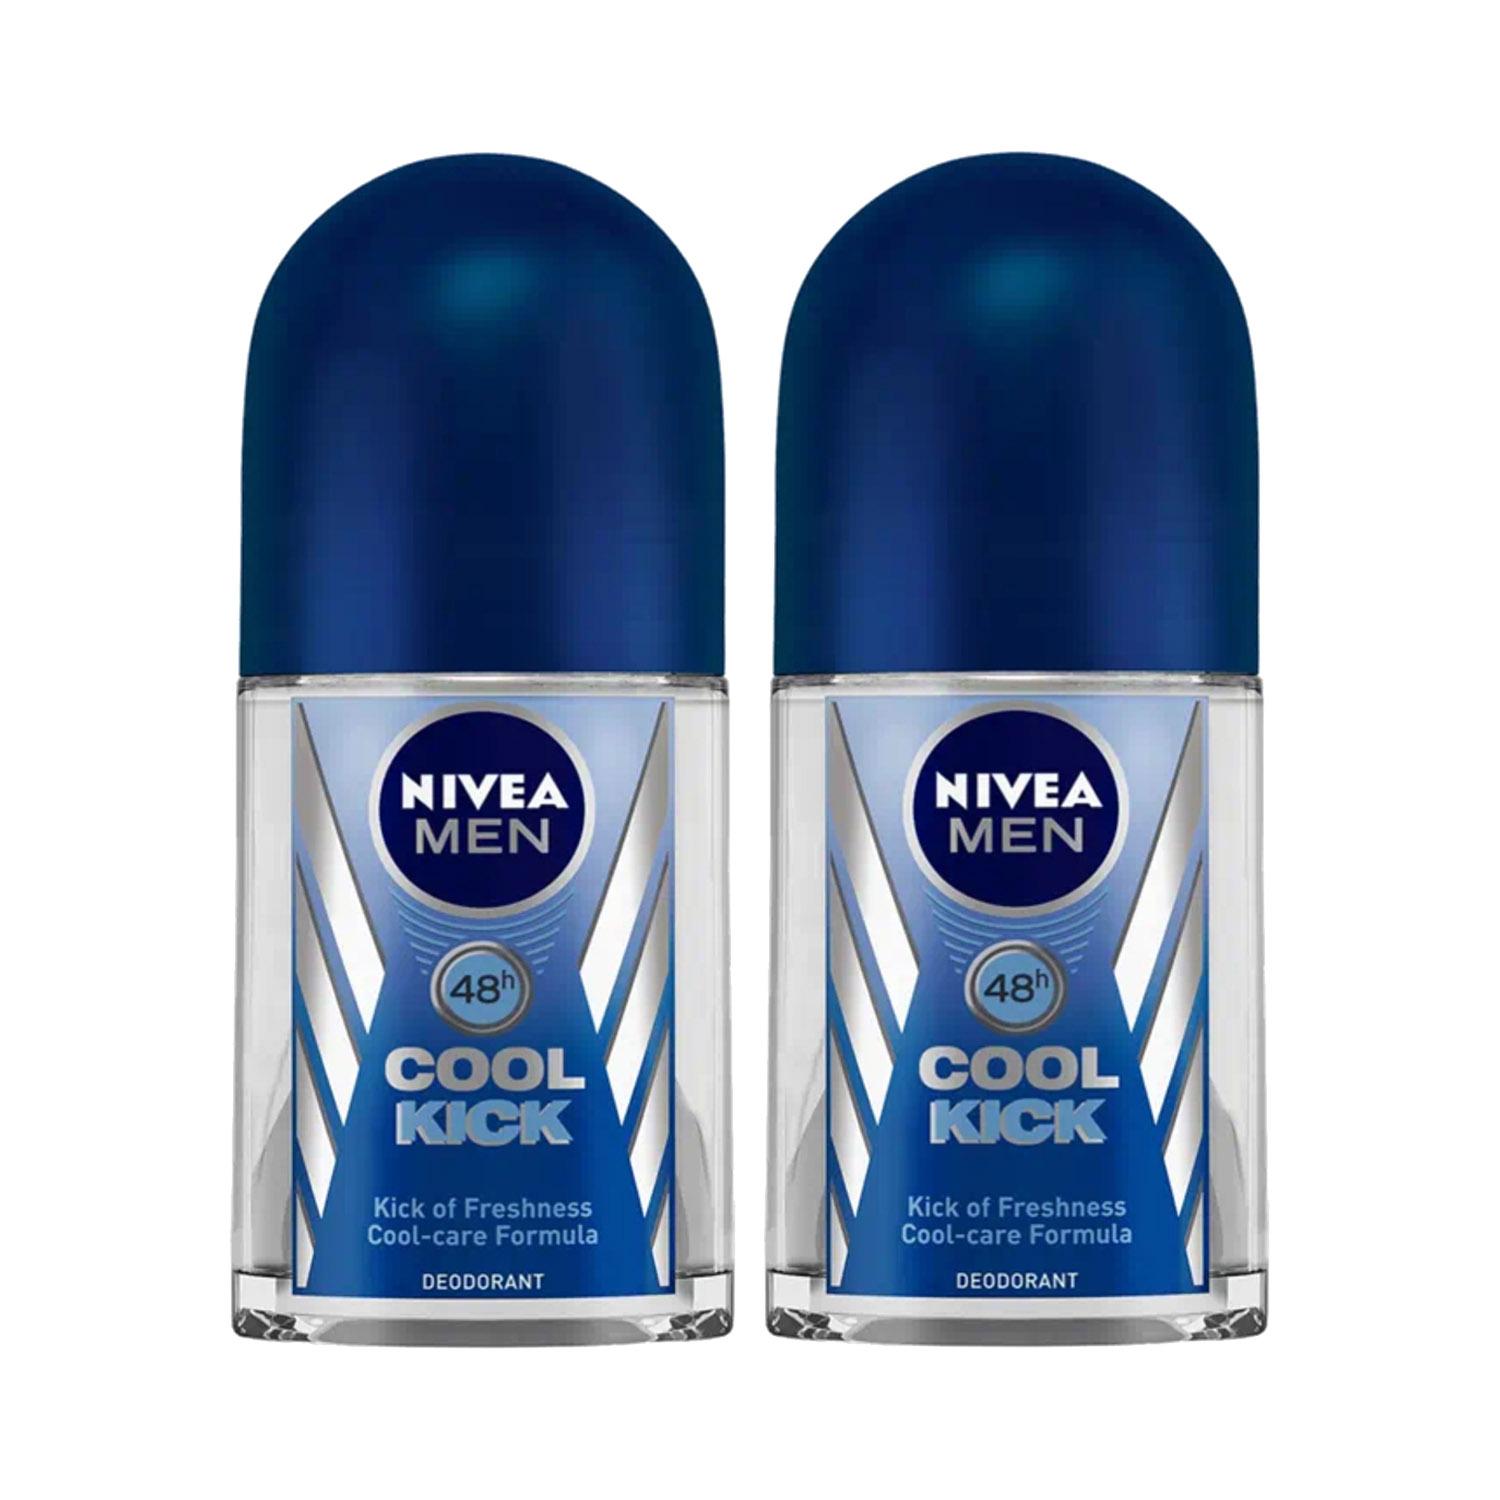 Nivea | Nivea Nfm Cool Kick Roll On (50ml) Pack of 2 Combo